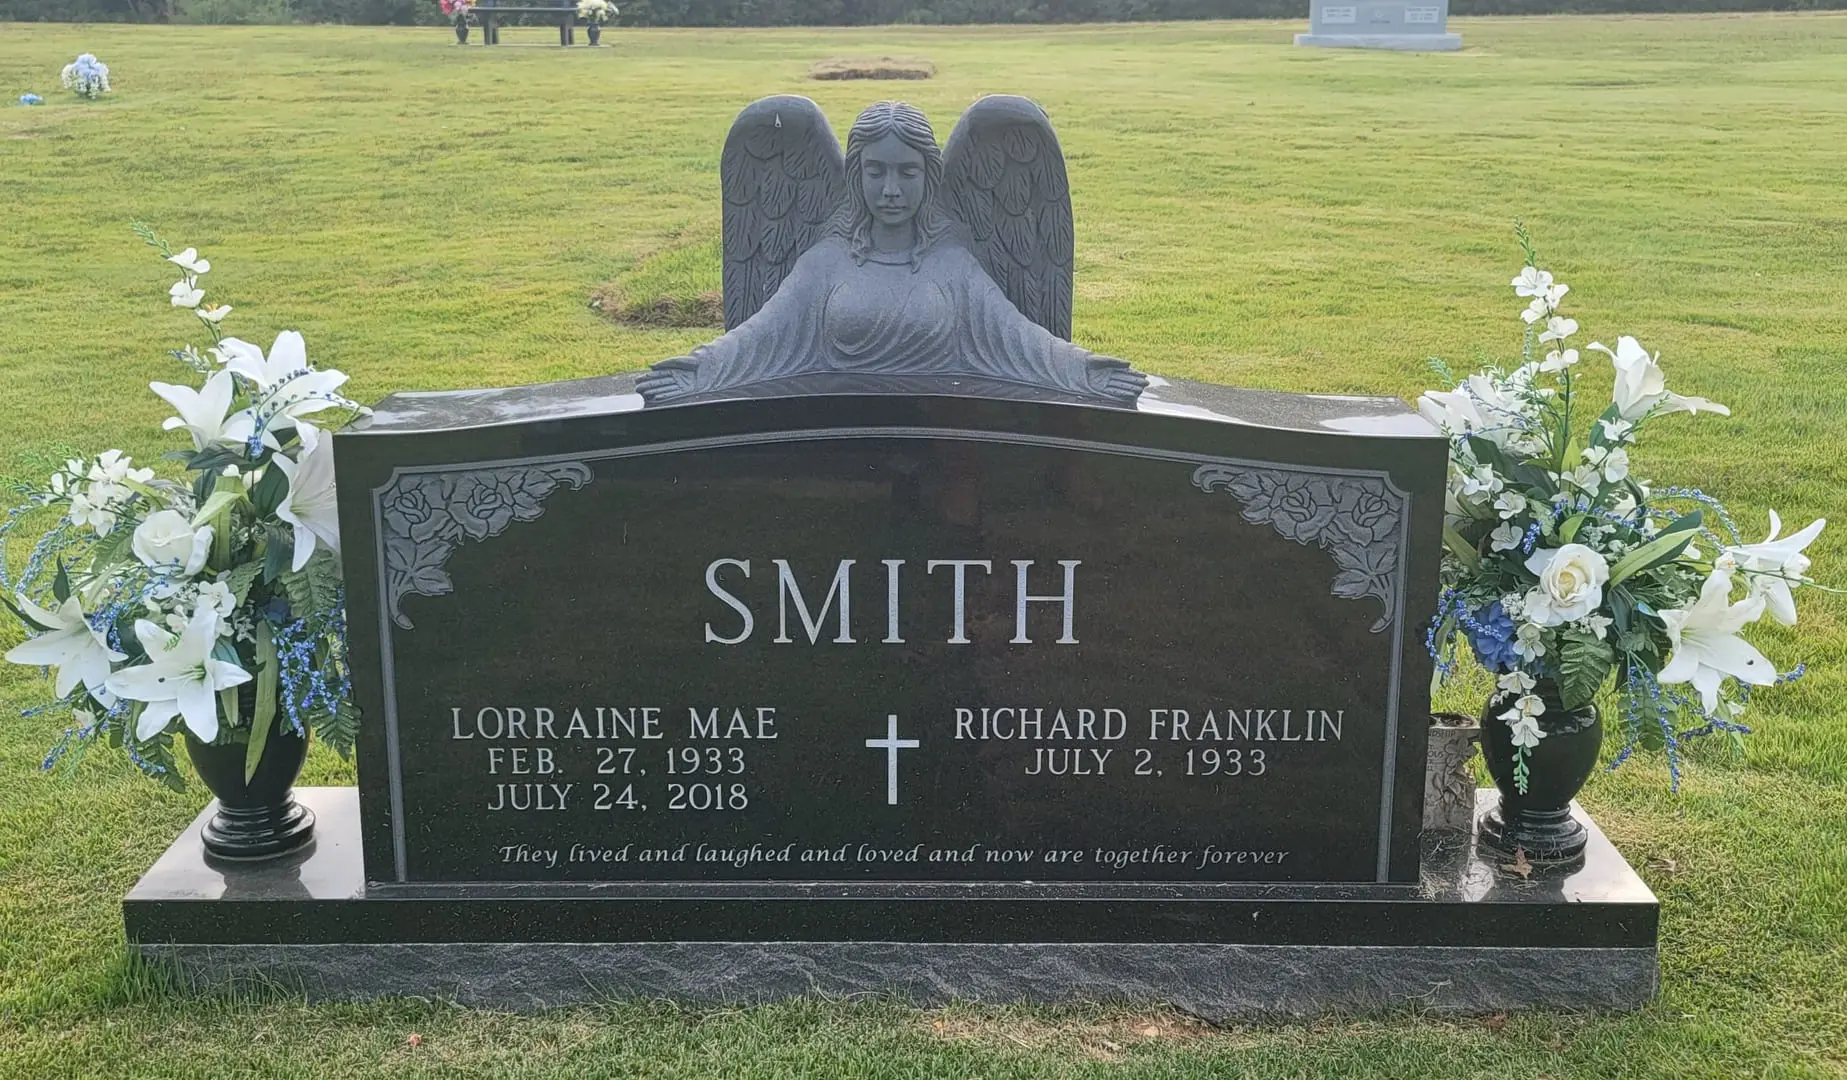 A memorial slab for Lorraine Mae and Richard Franklin